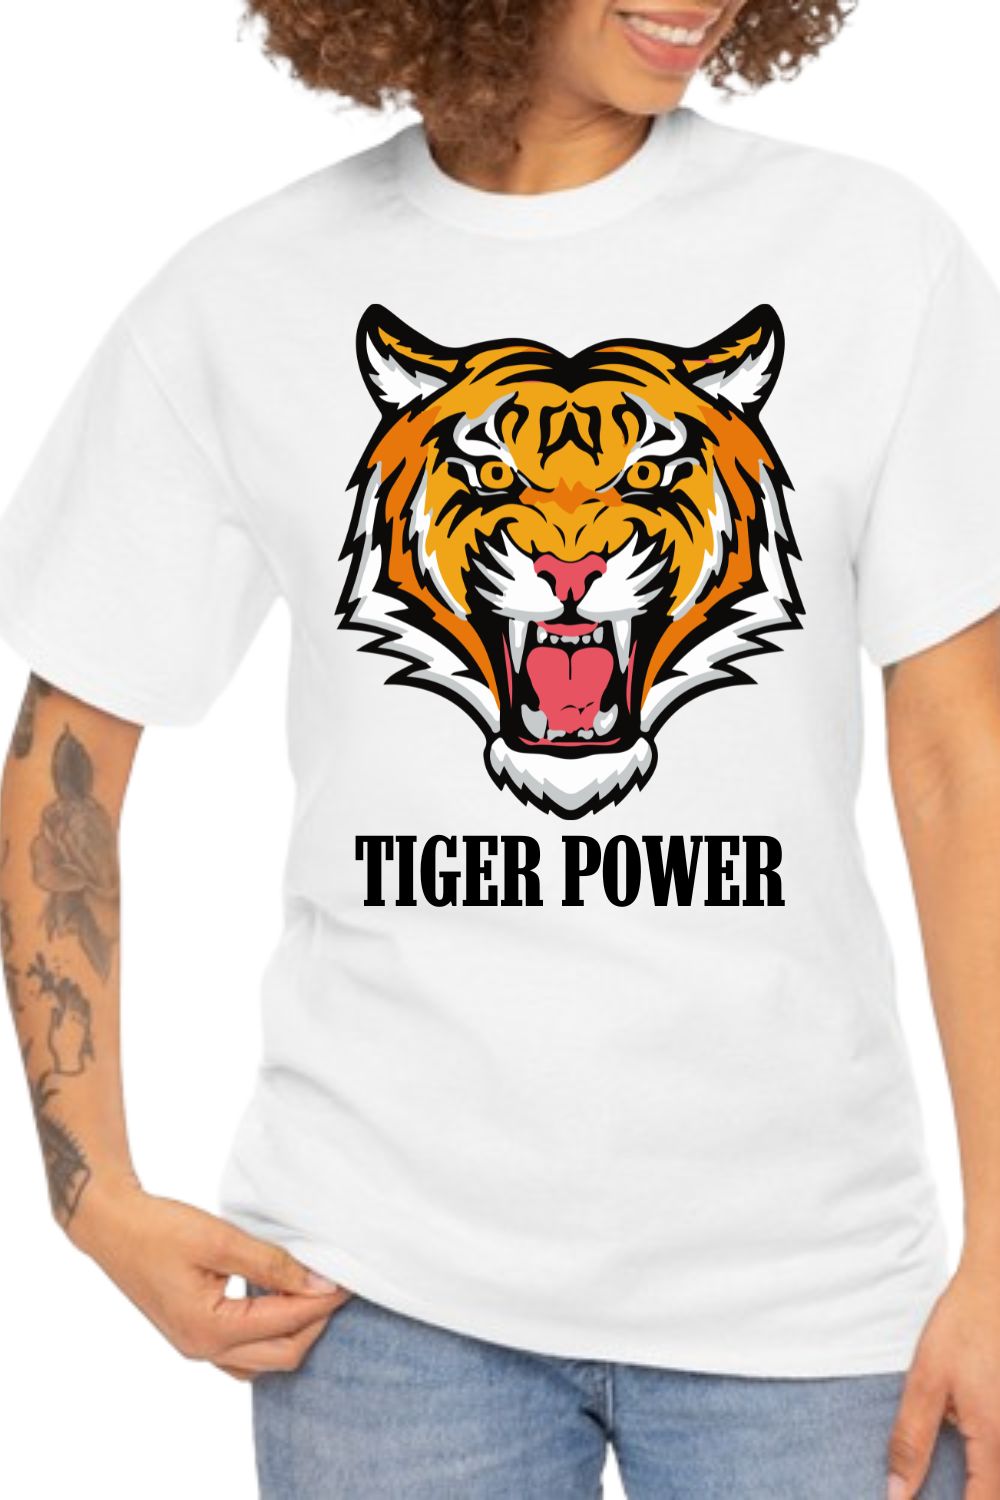 Tiger Power Design pinterest preview image.